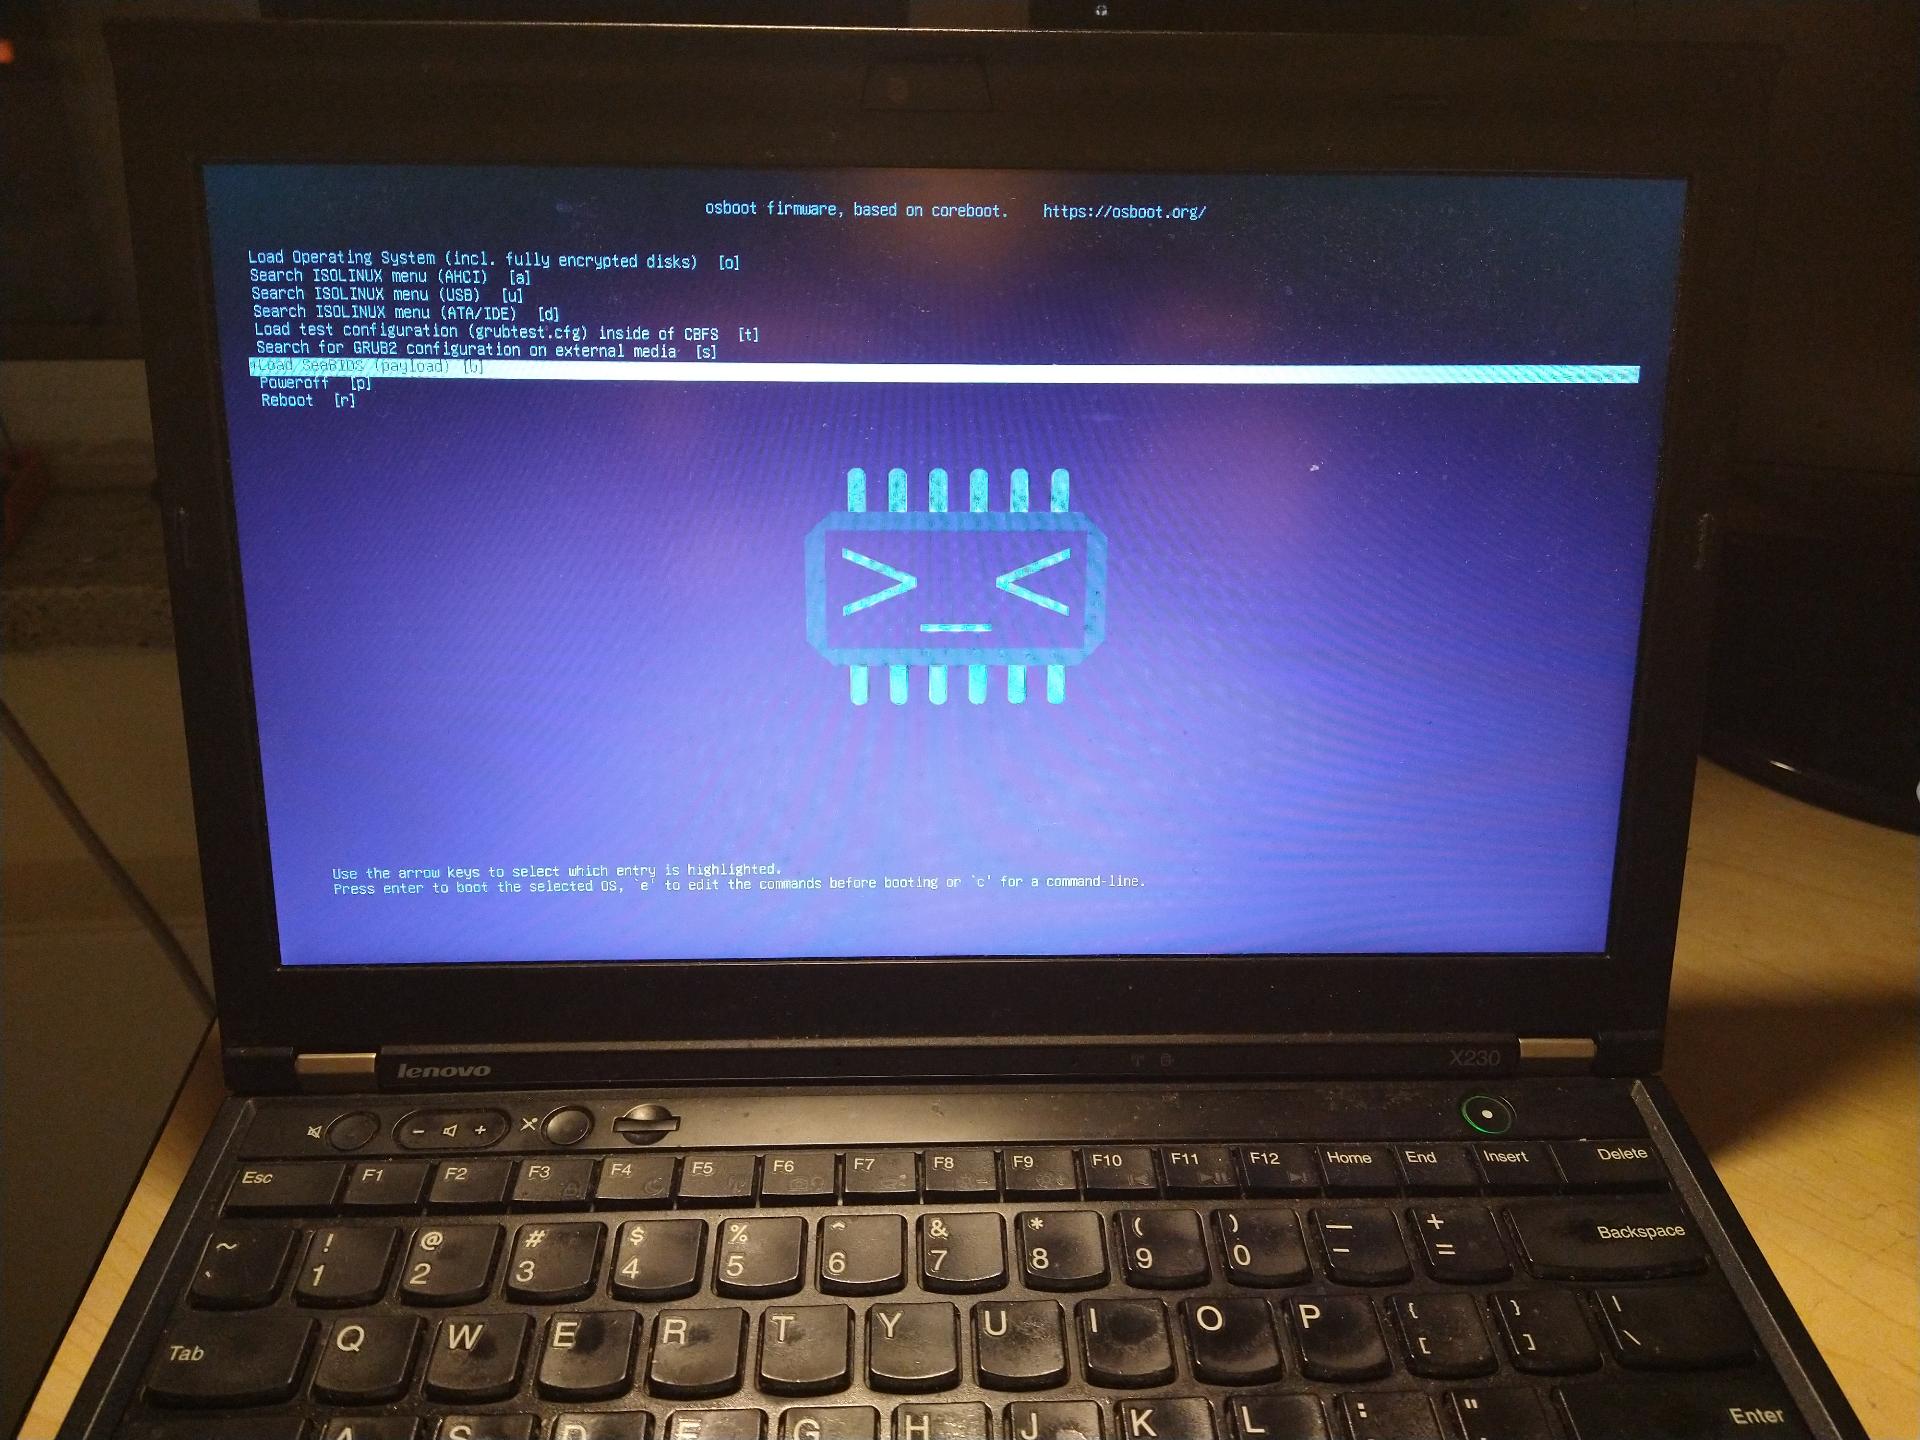 osboot screen (grub payload) running on my x230. Cool osboot logo is displayed